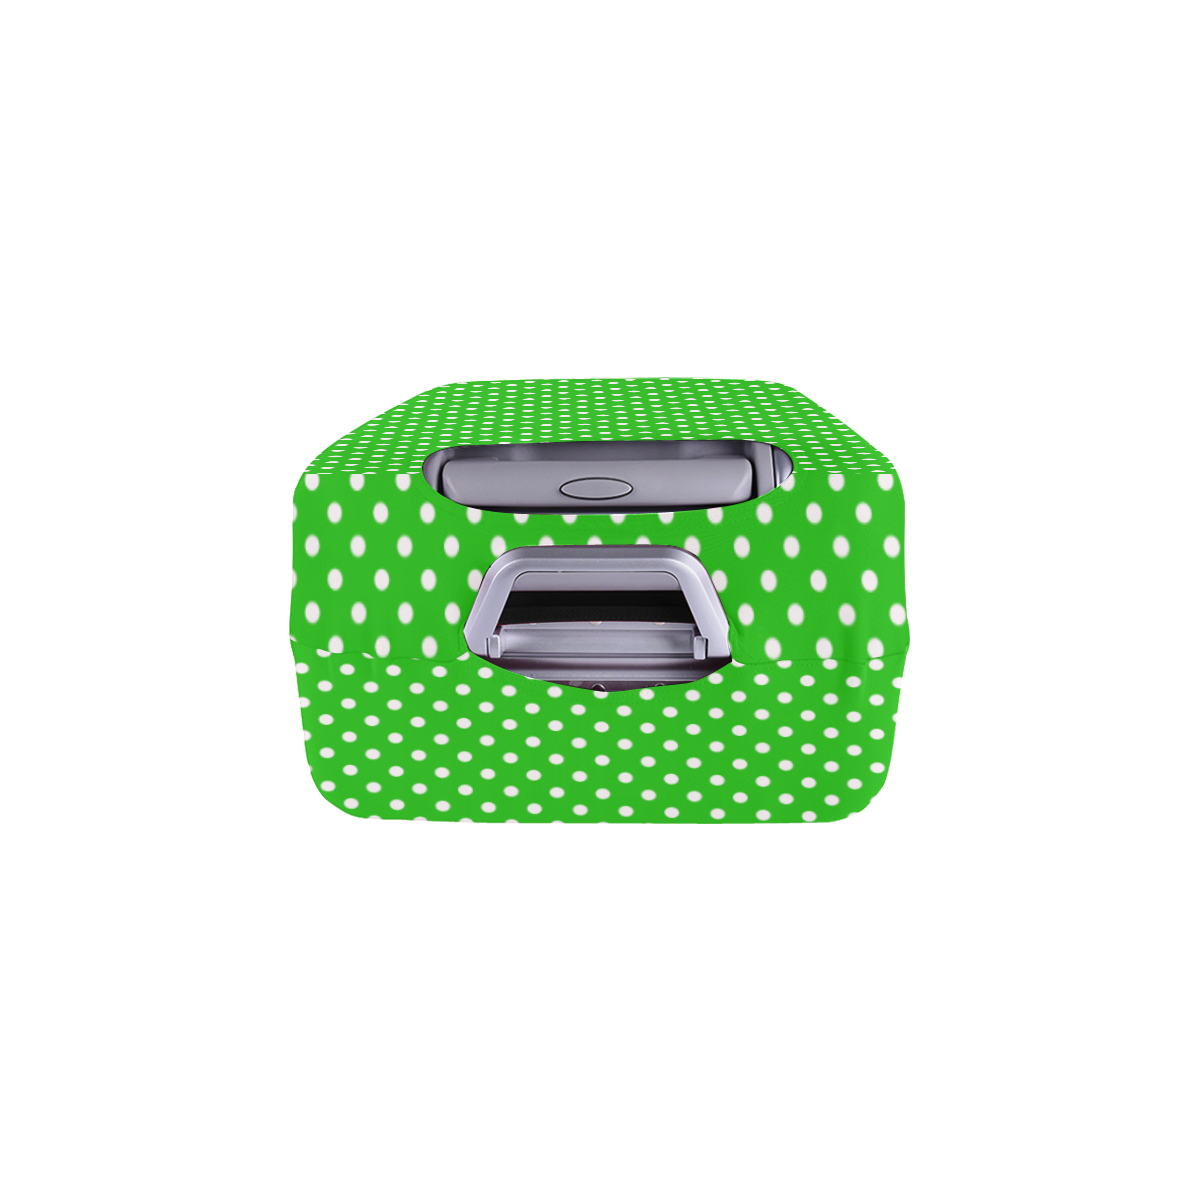 Green polka dots Luggage Cover/Medium 22"-25"